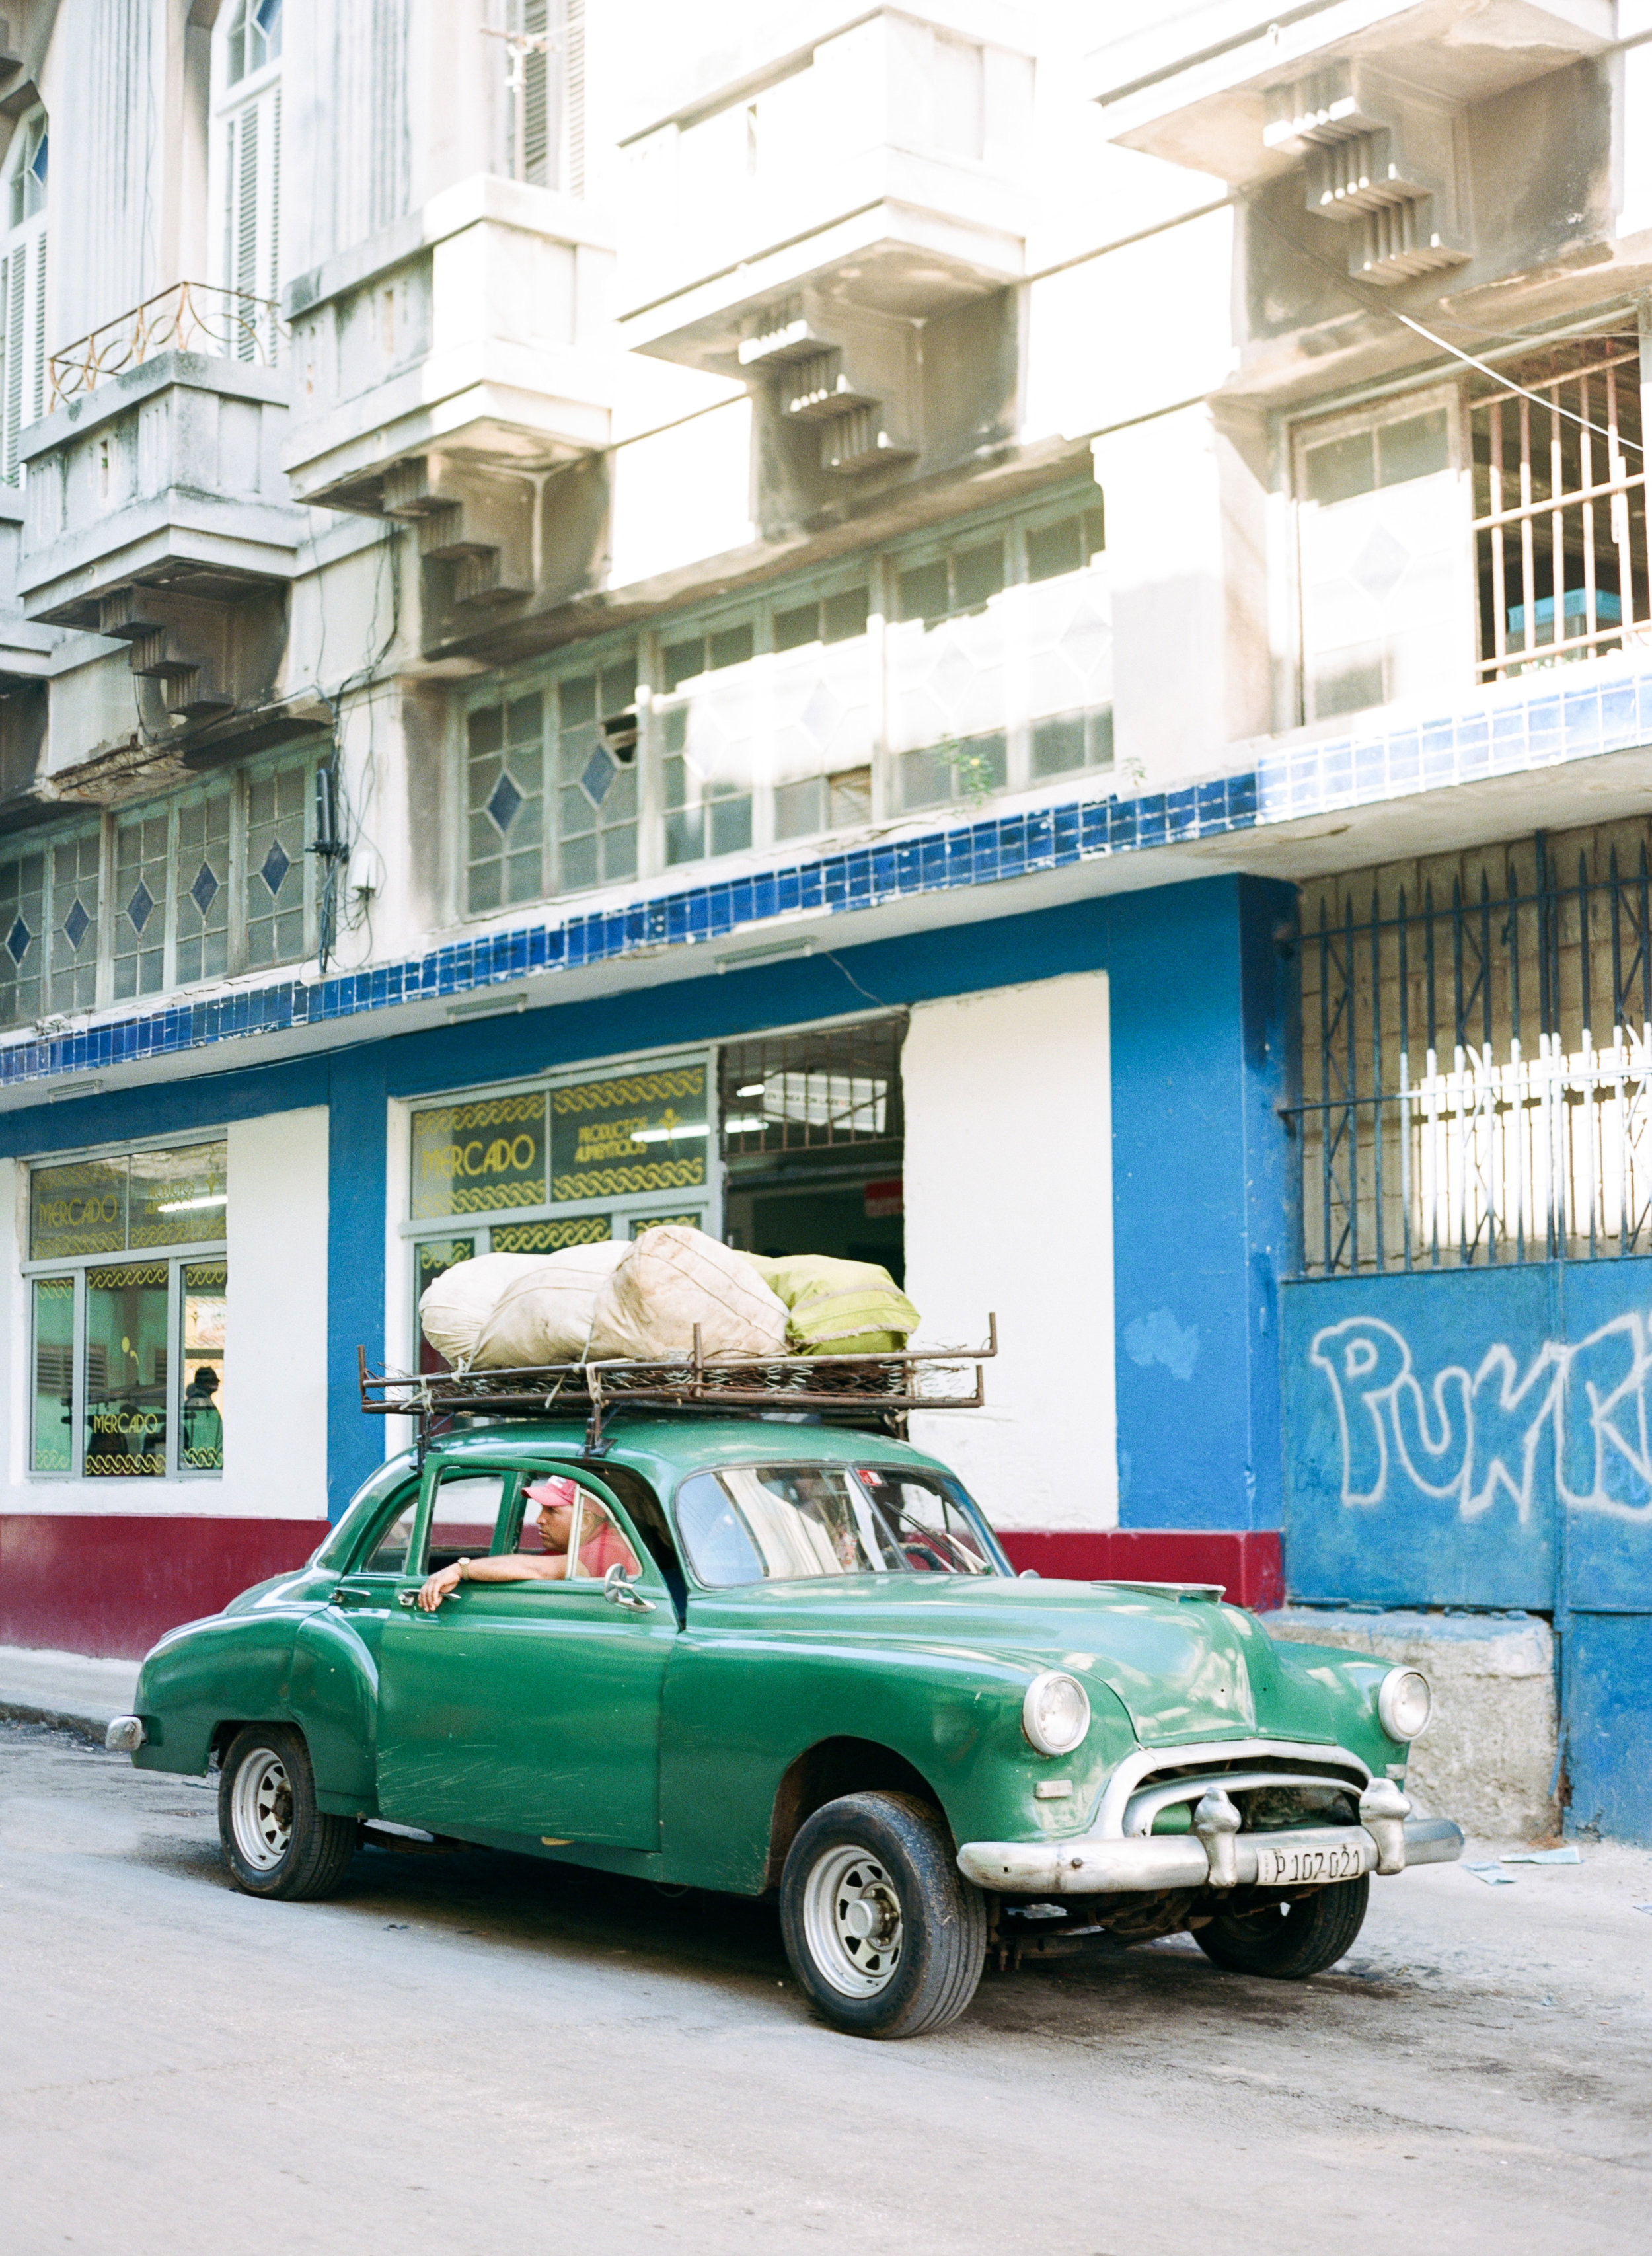 Cuba-Travel-photography-rachael-mcitnosh-photography-38.jpg